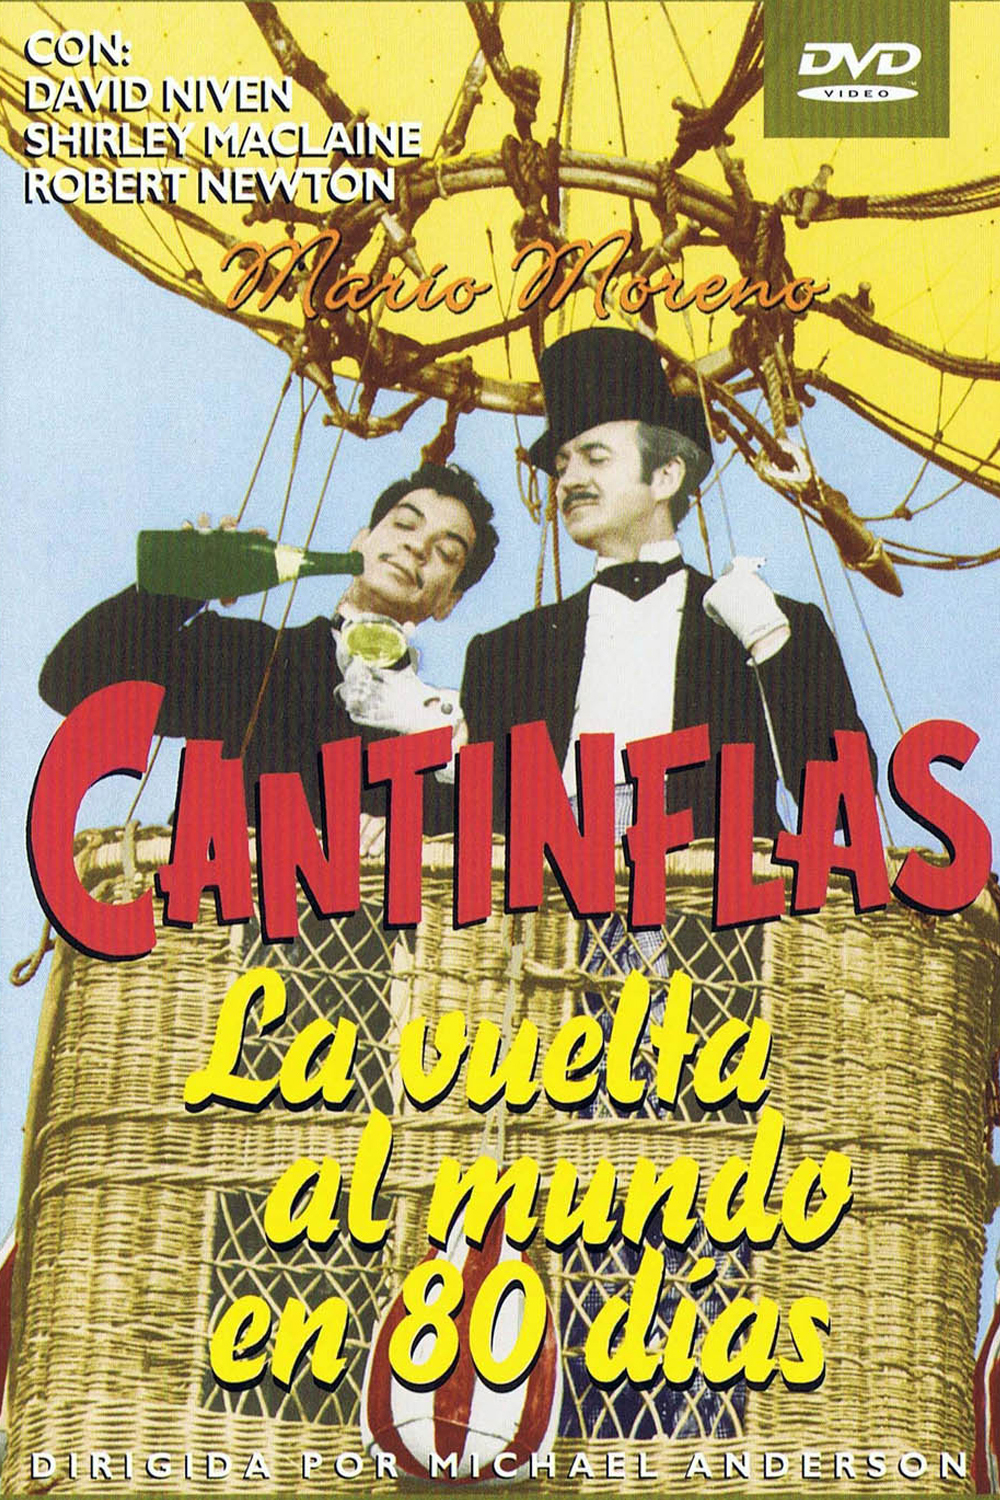 Mario-Moreno-Cantinflas-07